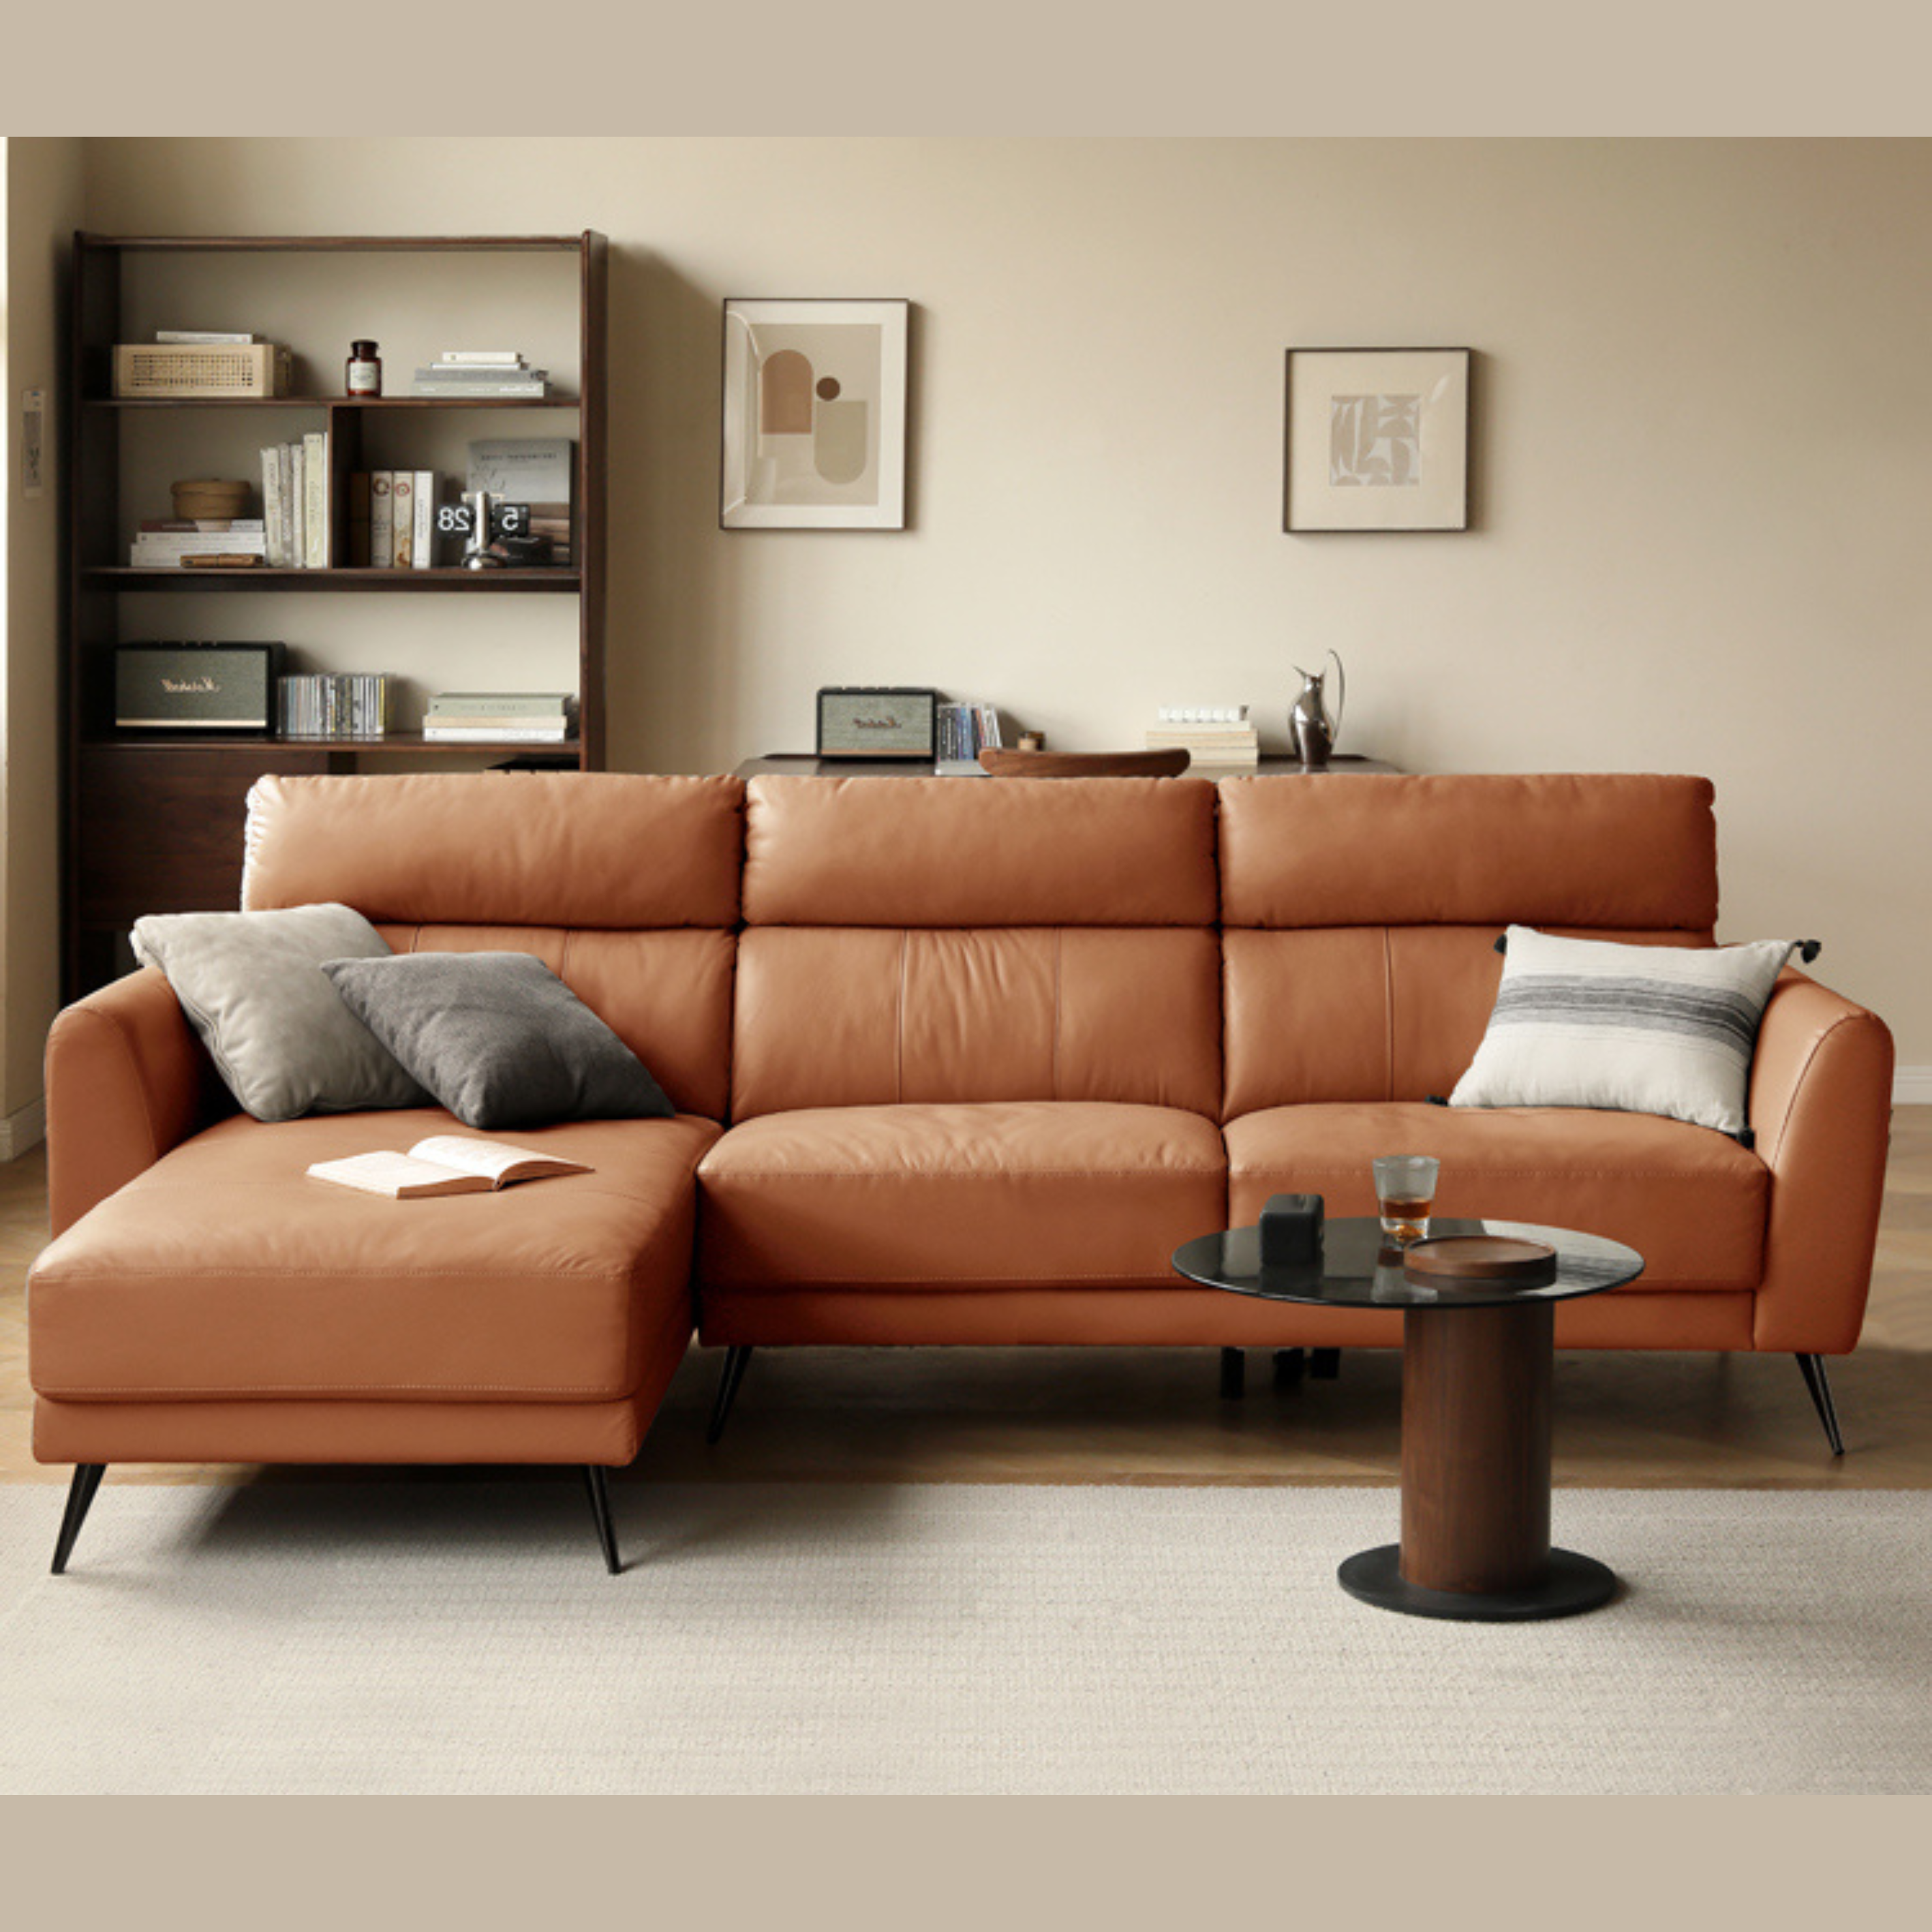 Leather Sofa Modern Simple Living Room